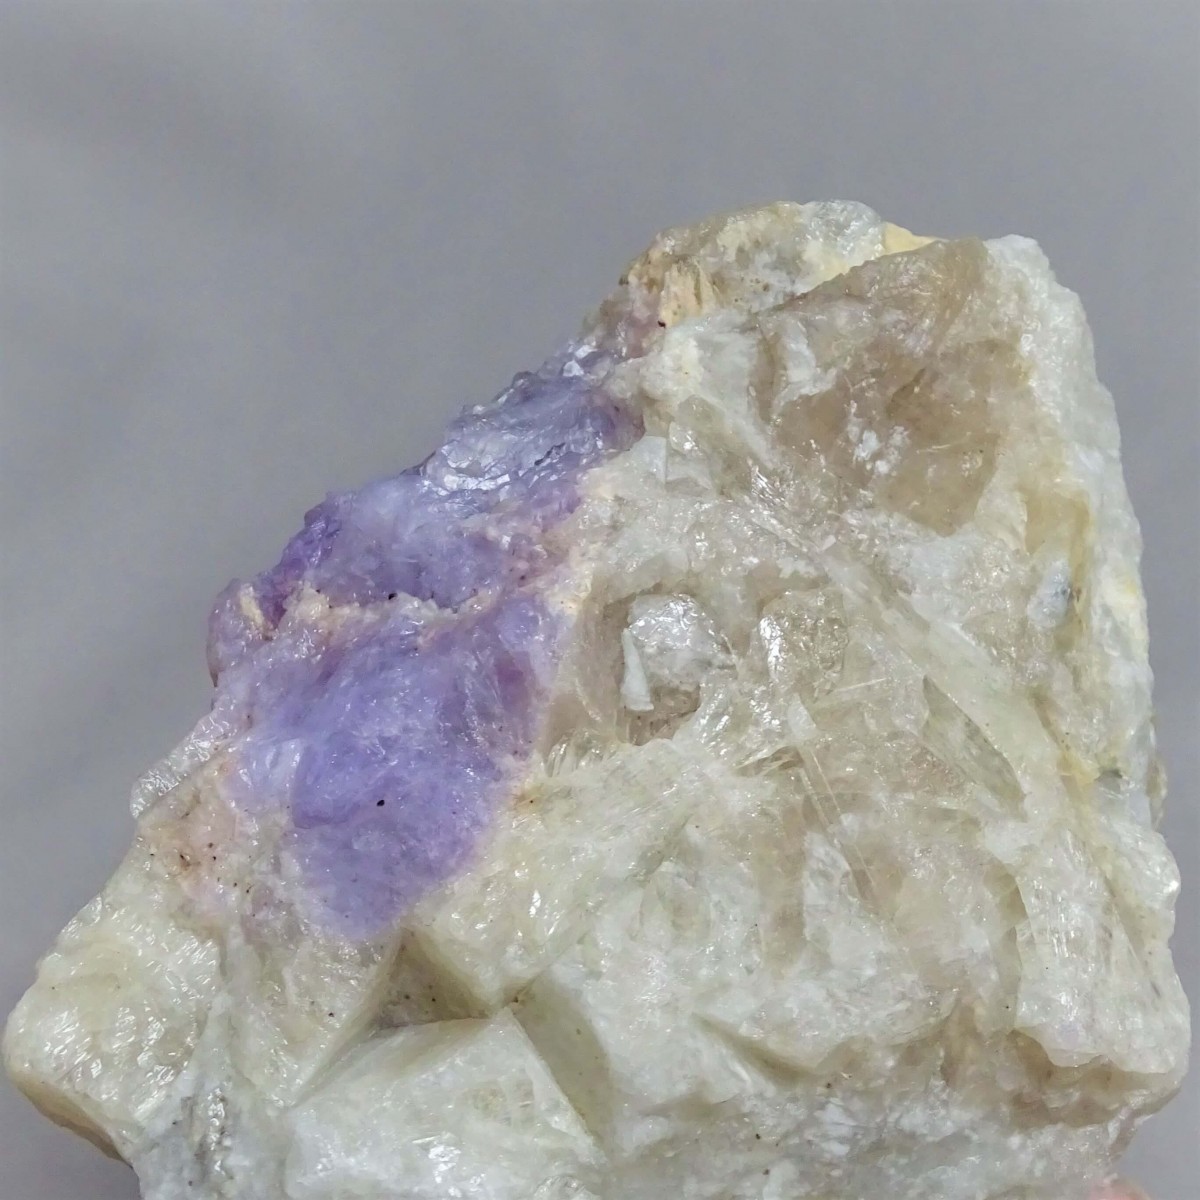 Hackmanite raw mineral 438g, Afghanistan